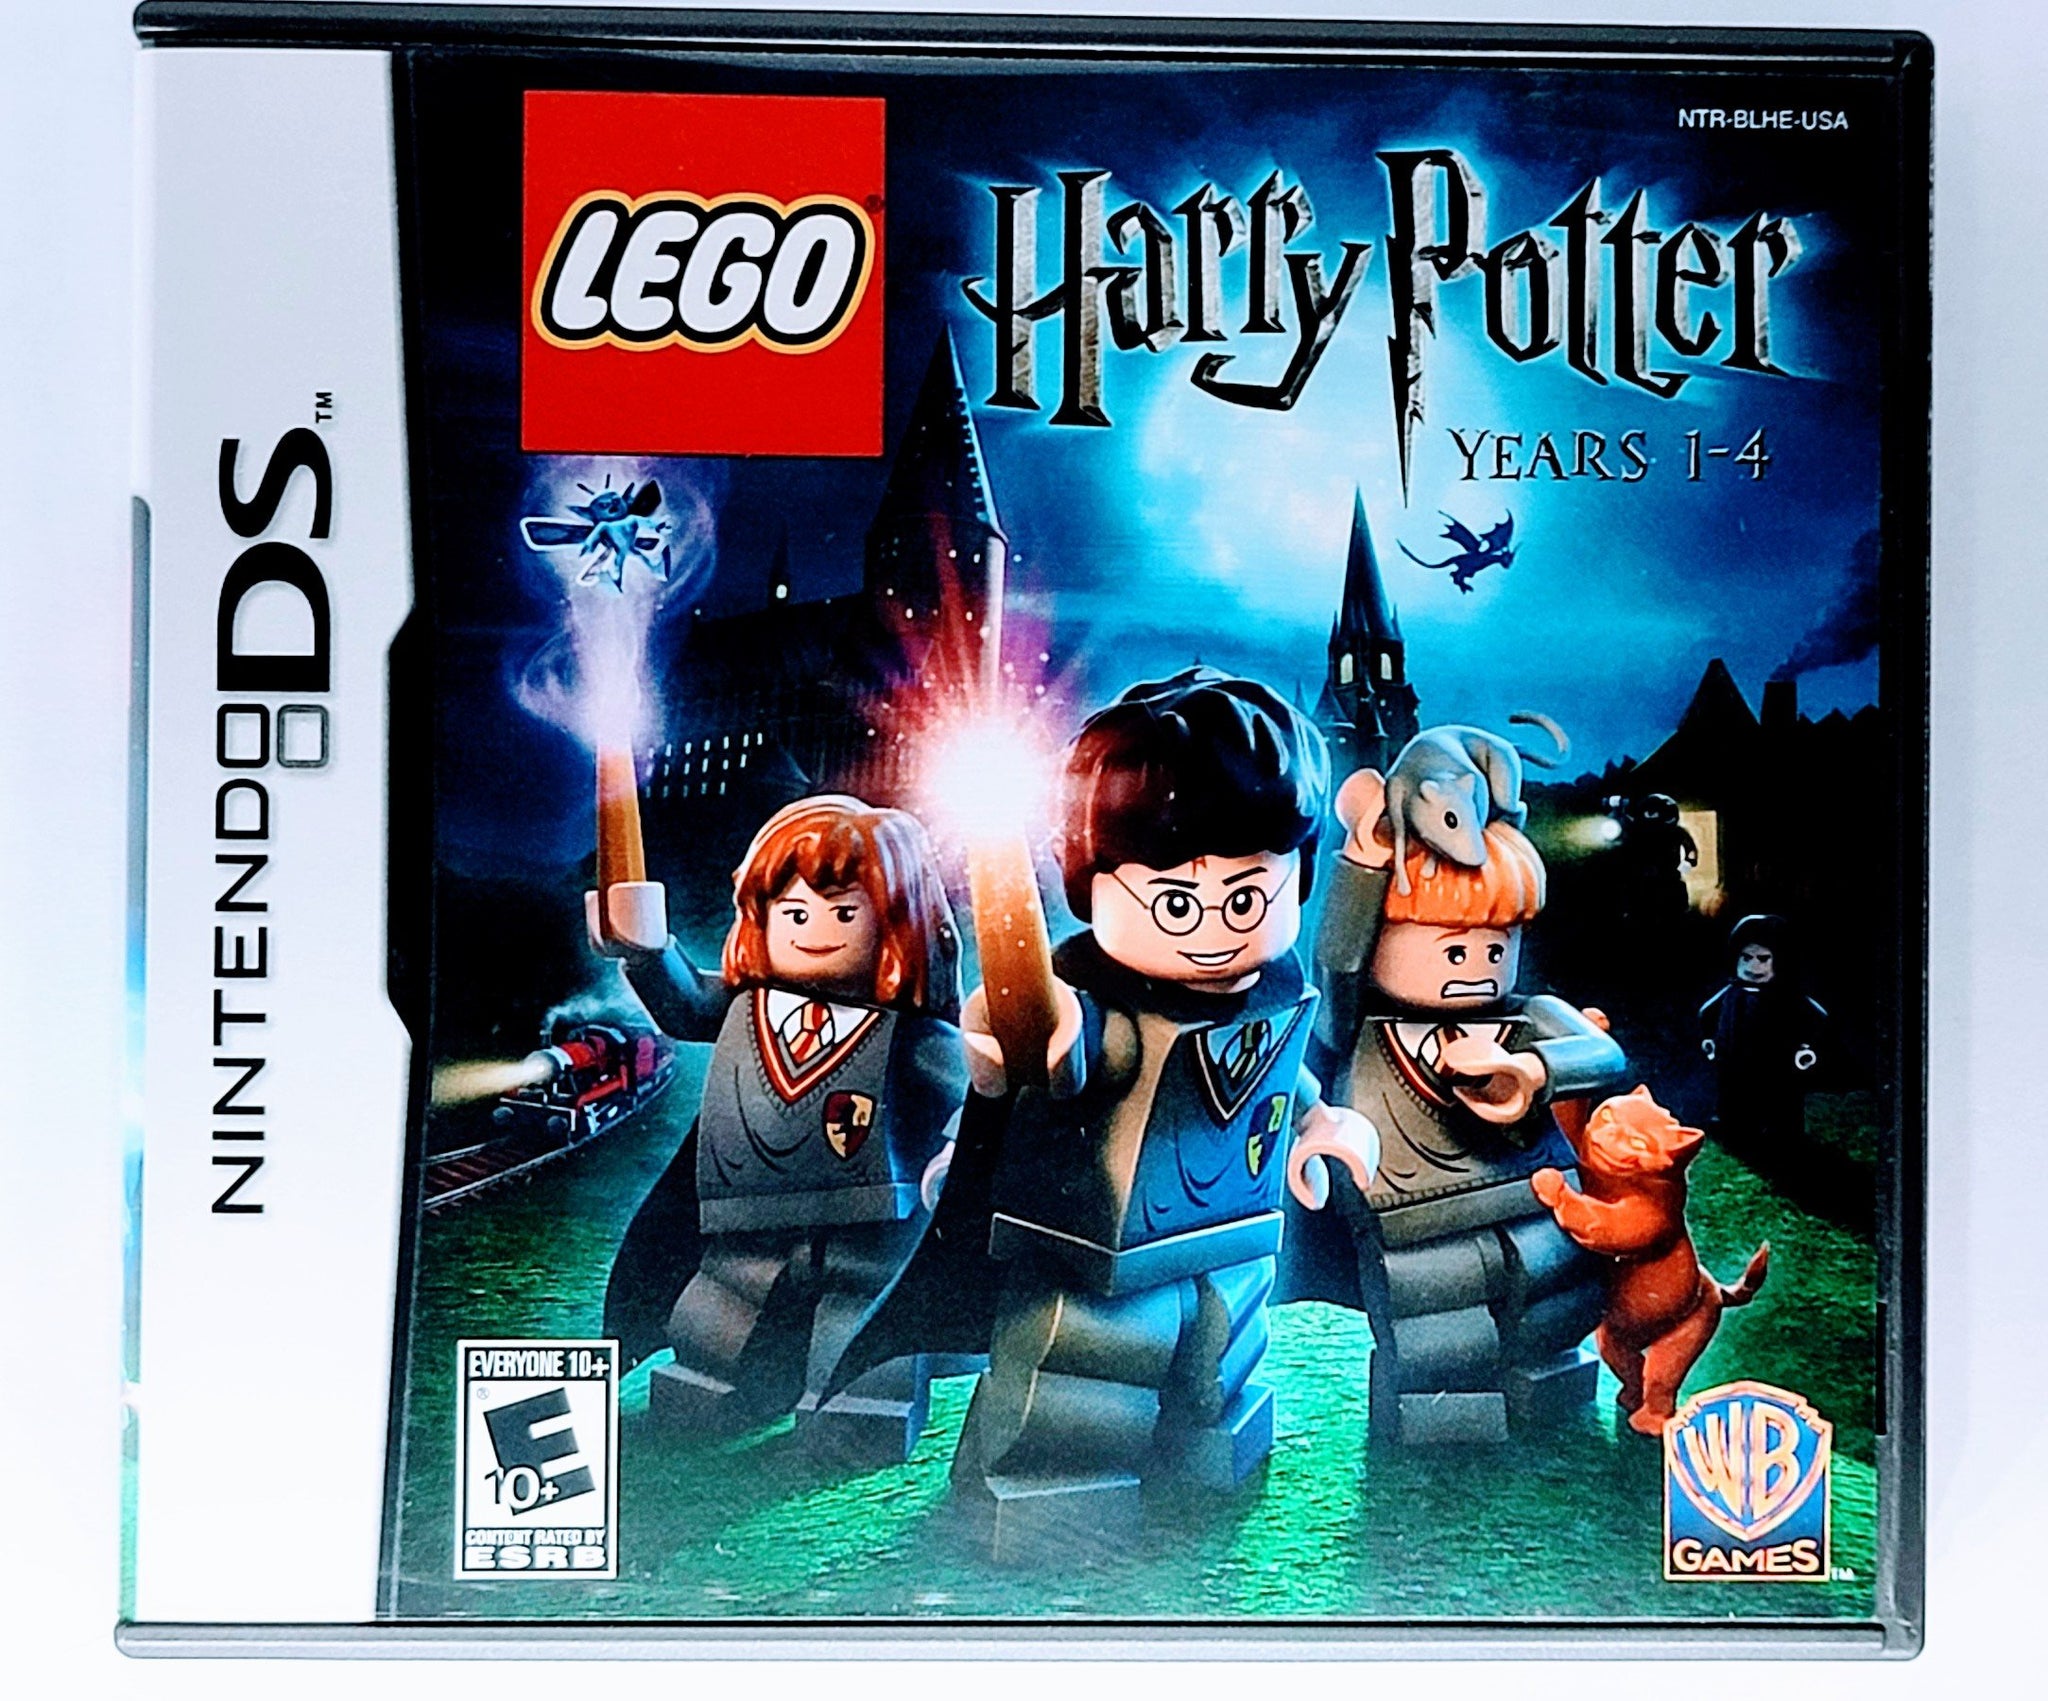 LEGO Harry Potter: Years 1-4 - Nintendo DS, Nintendo DS